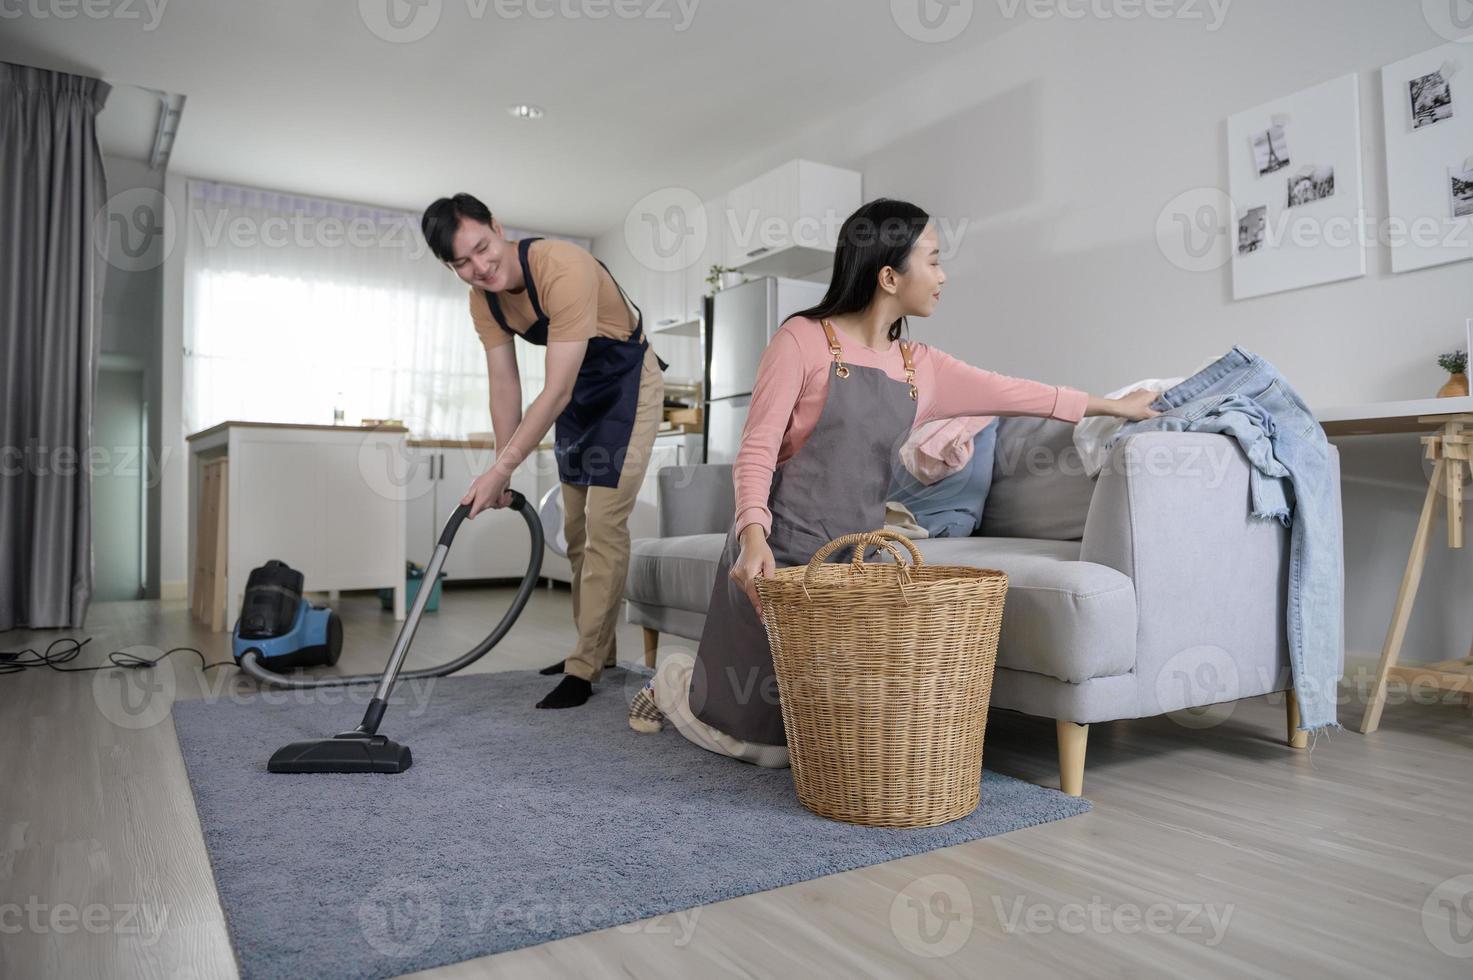 feliz jovem ásia casal limpeza casa junto, saudável estilo de vida conceito foto